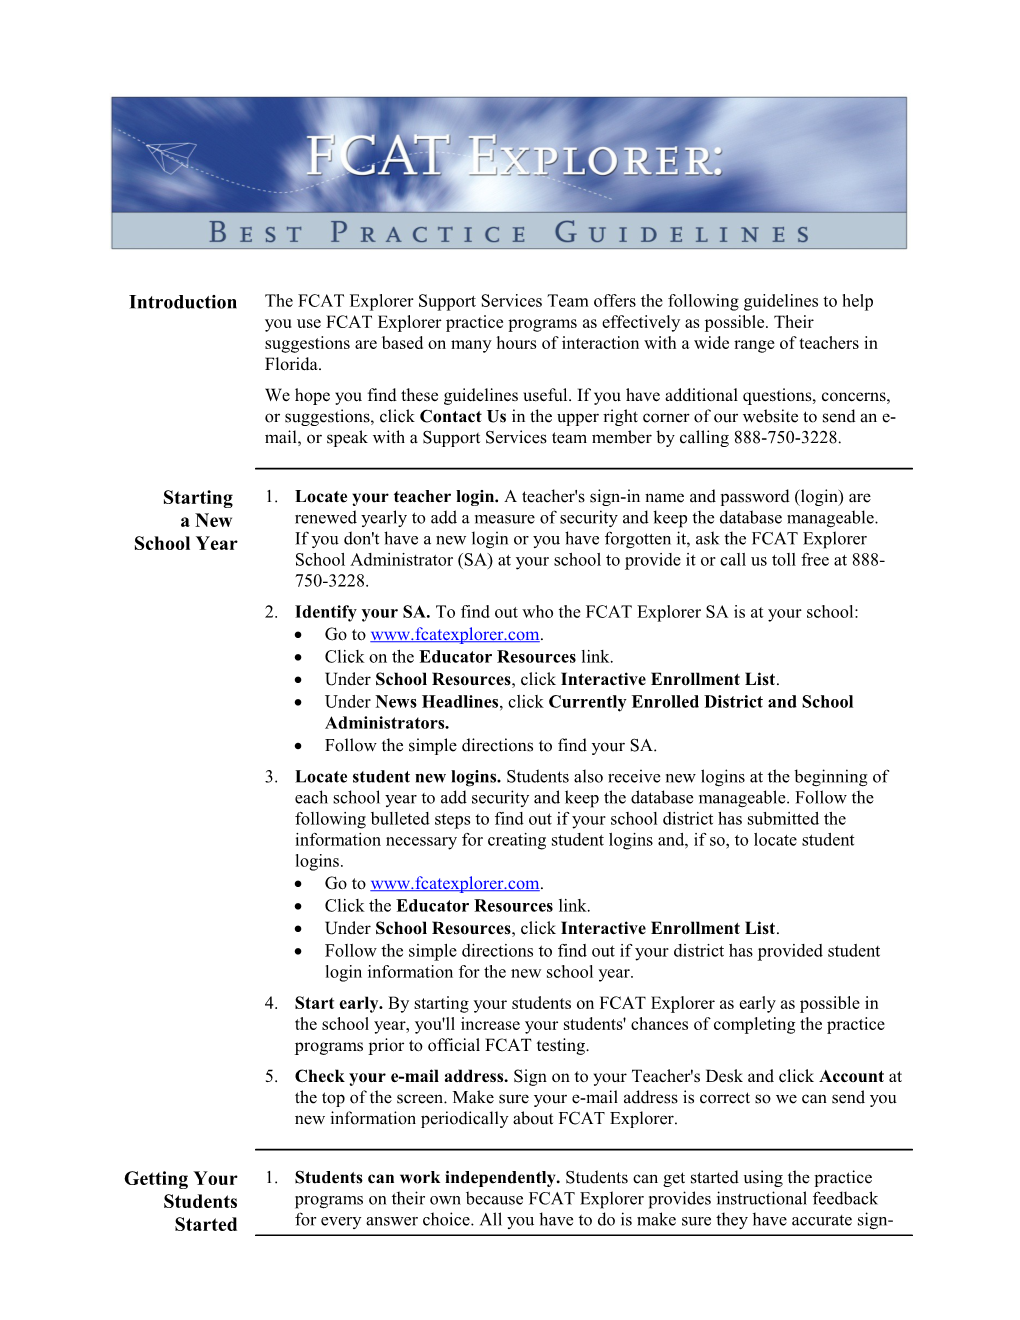 FCAT Explorer Best Practice Guidelinespage 1 of 2